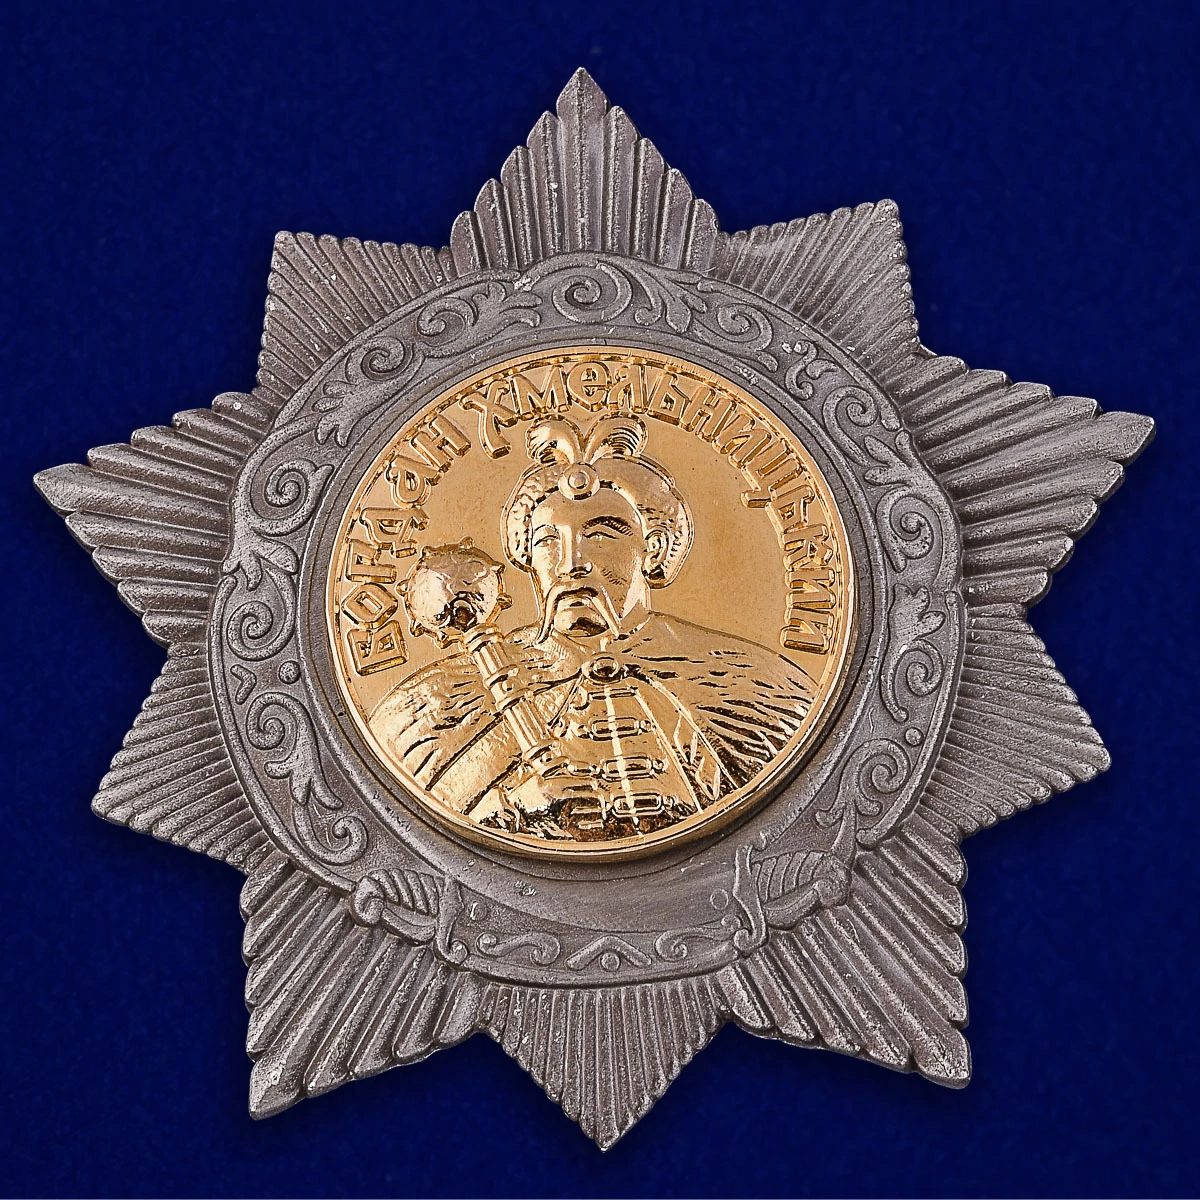 Сувенирный орден Богдана Хмельницкого 2 степени (СССР)  №671(437)